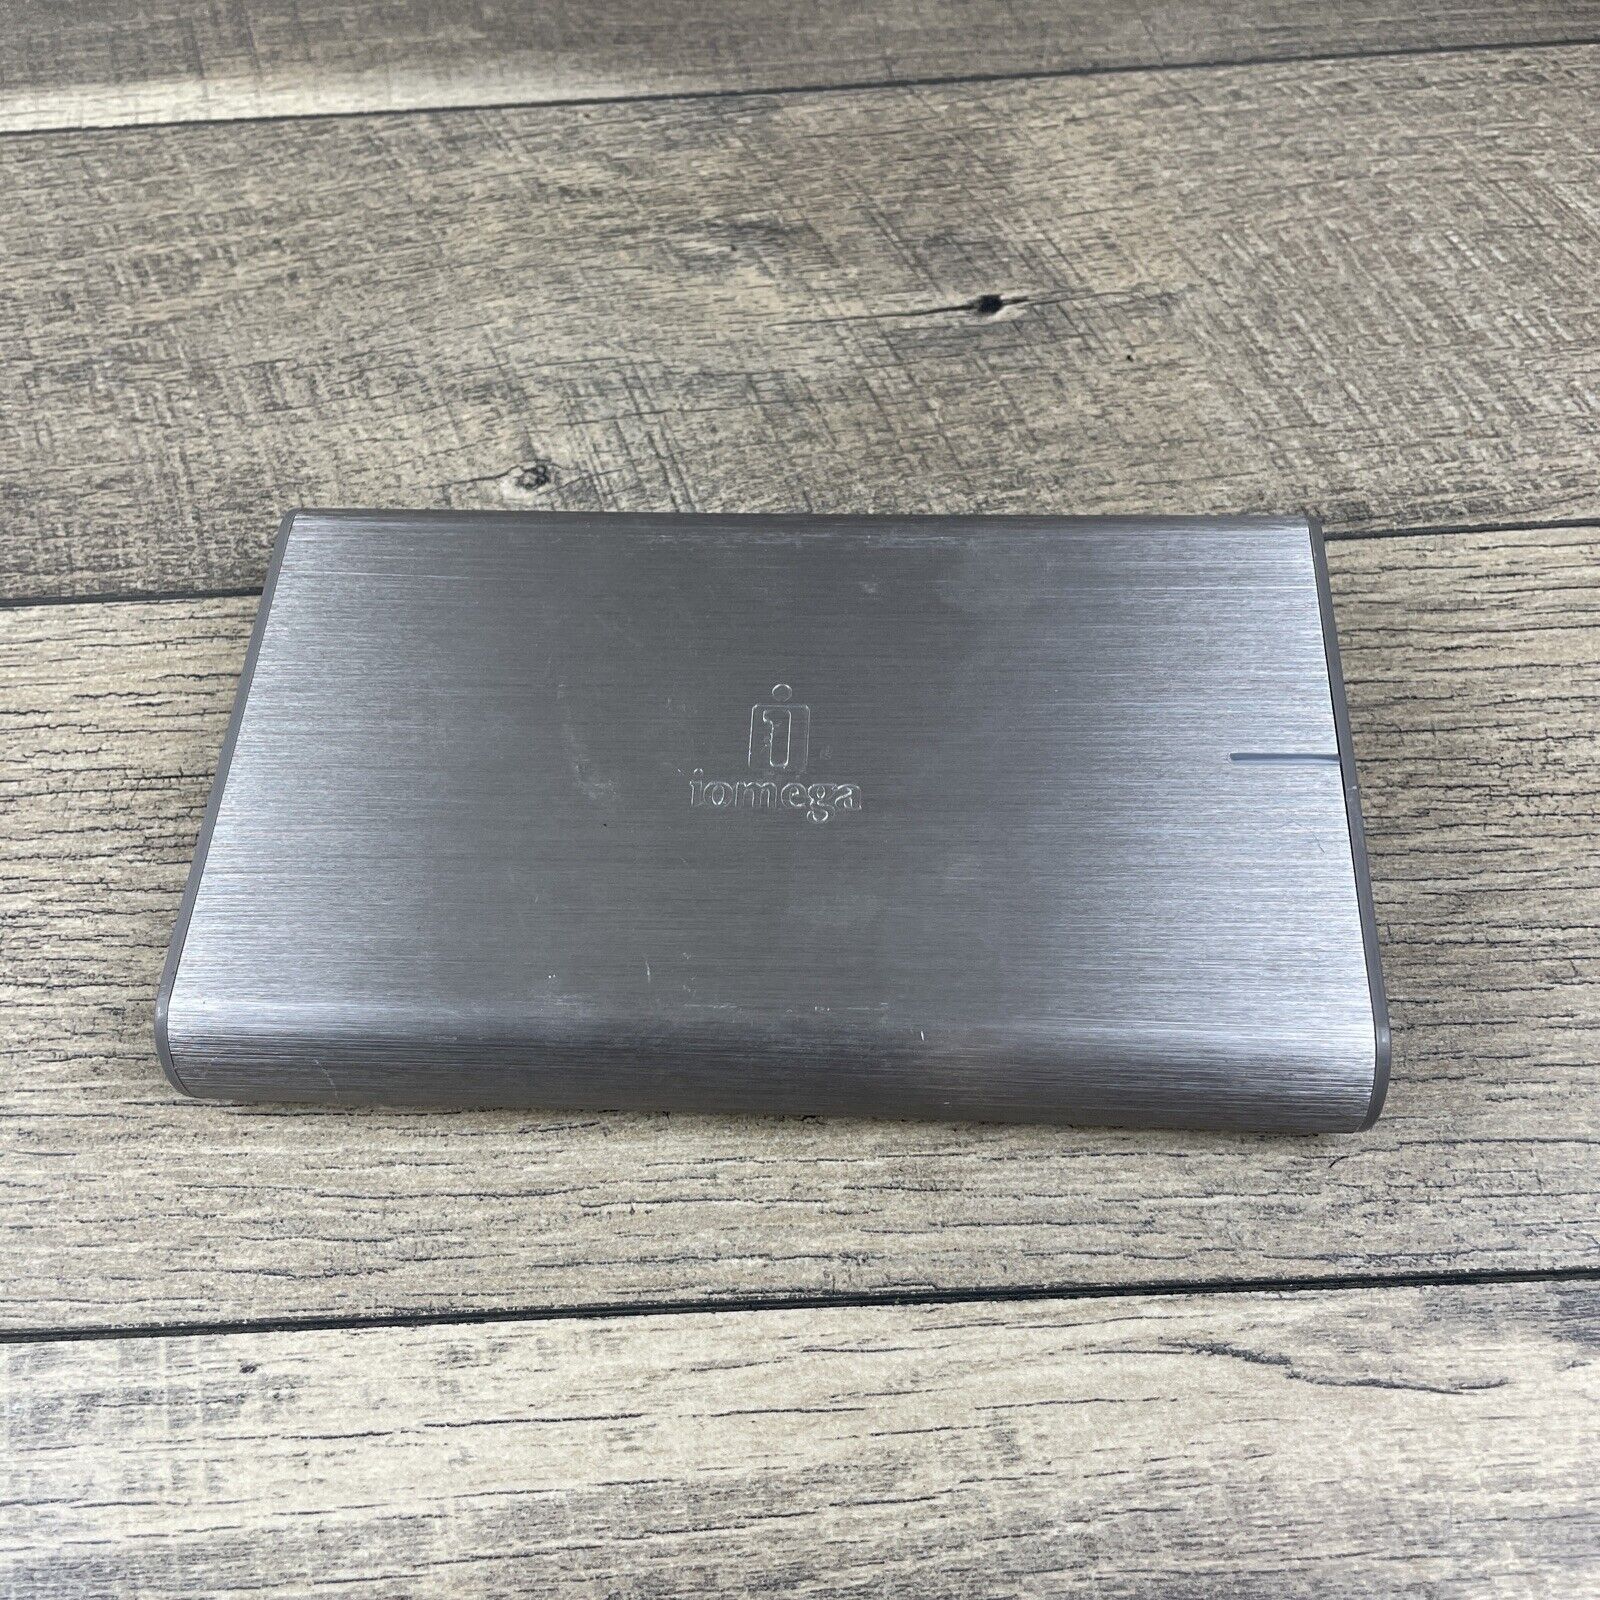 1.5 TB iomega Desktop External Hard Drive LDHD-UP - Stainless Steel Case